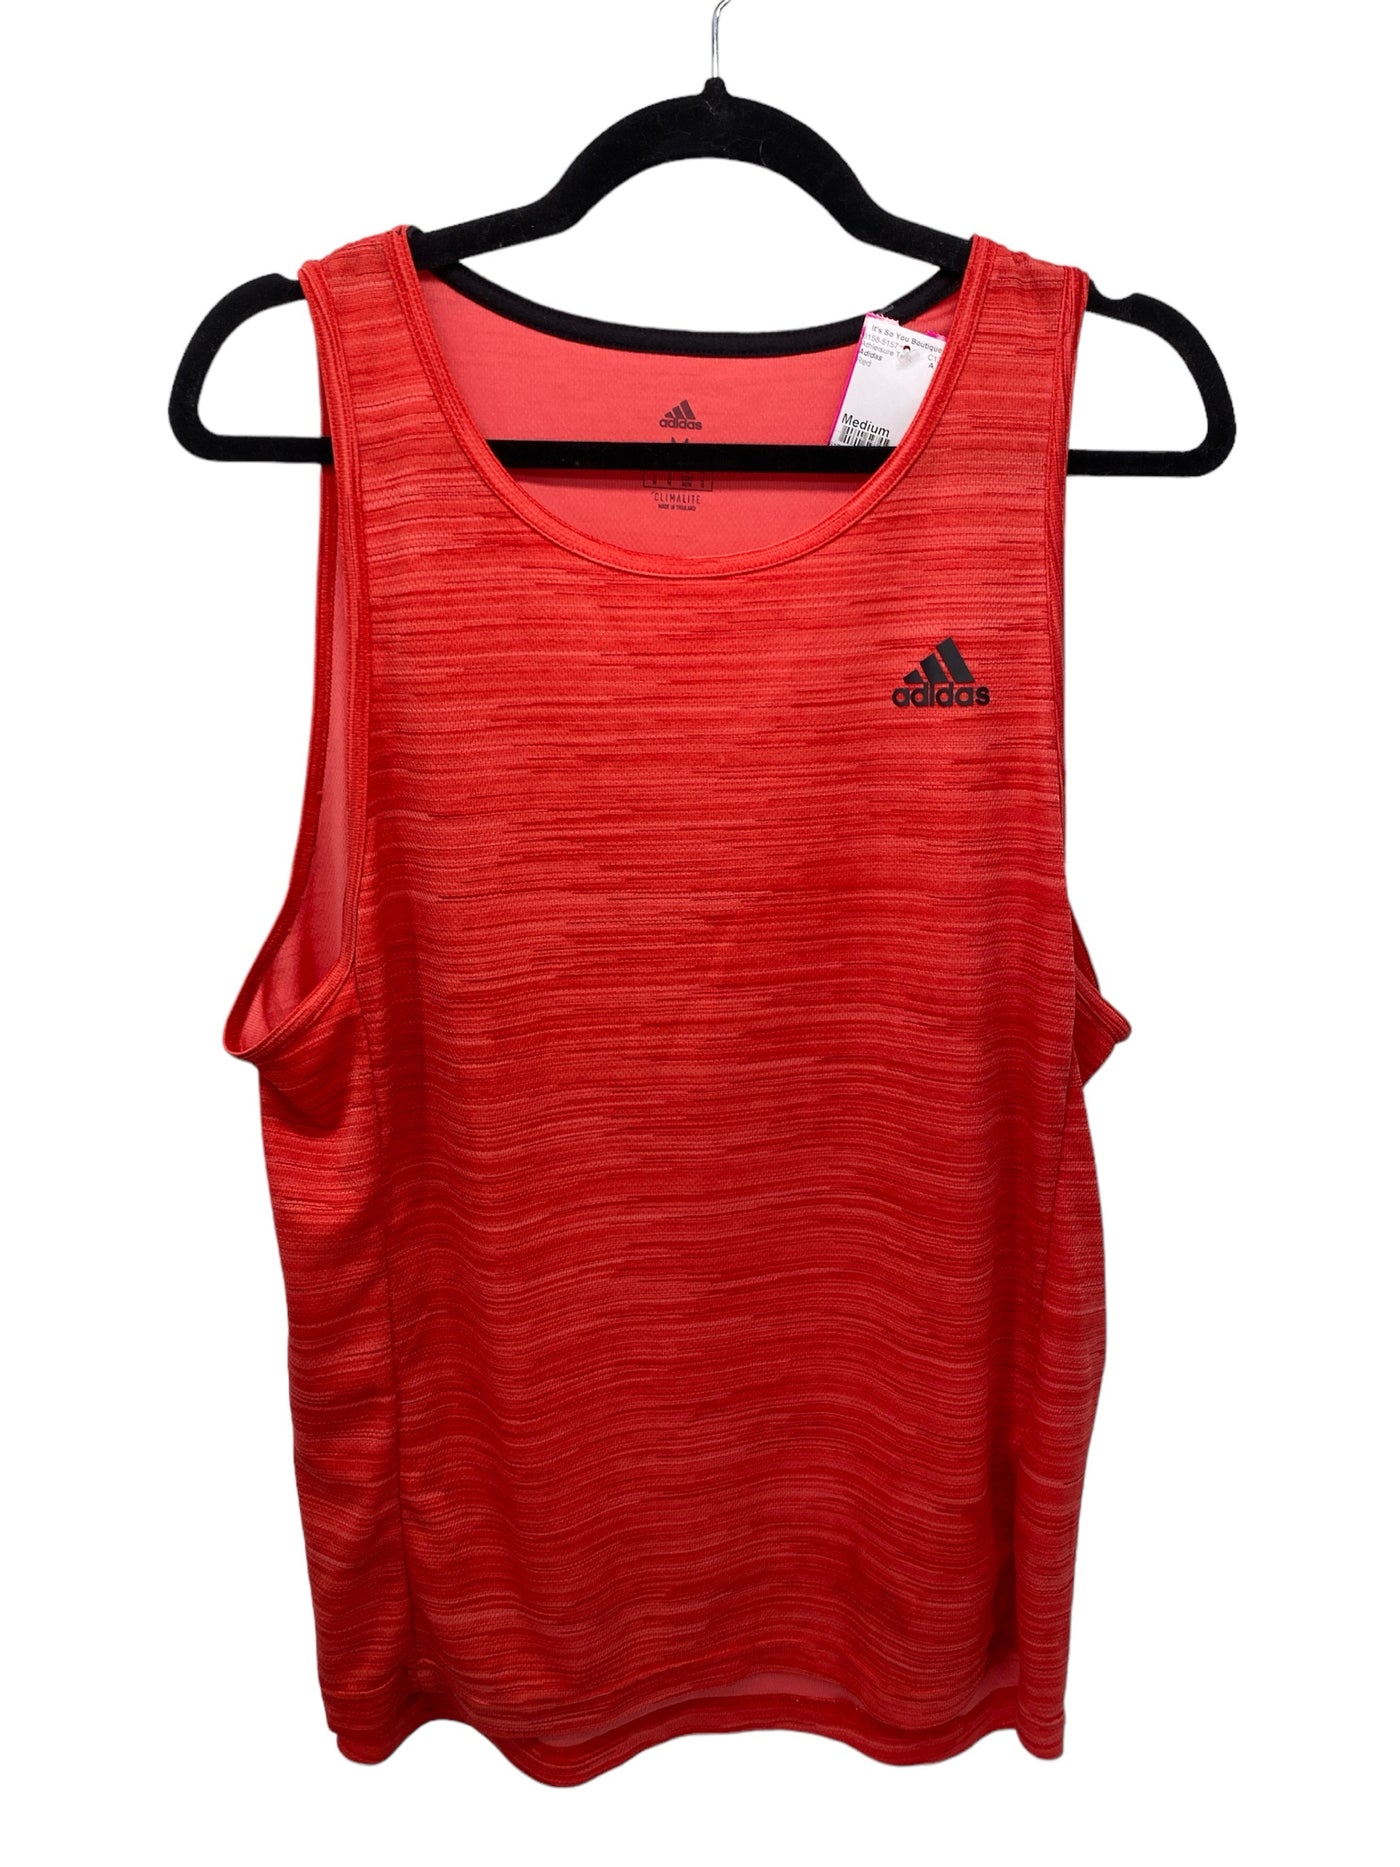 Adidas Misses Size Medium Red Athleisure Tank